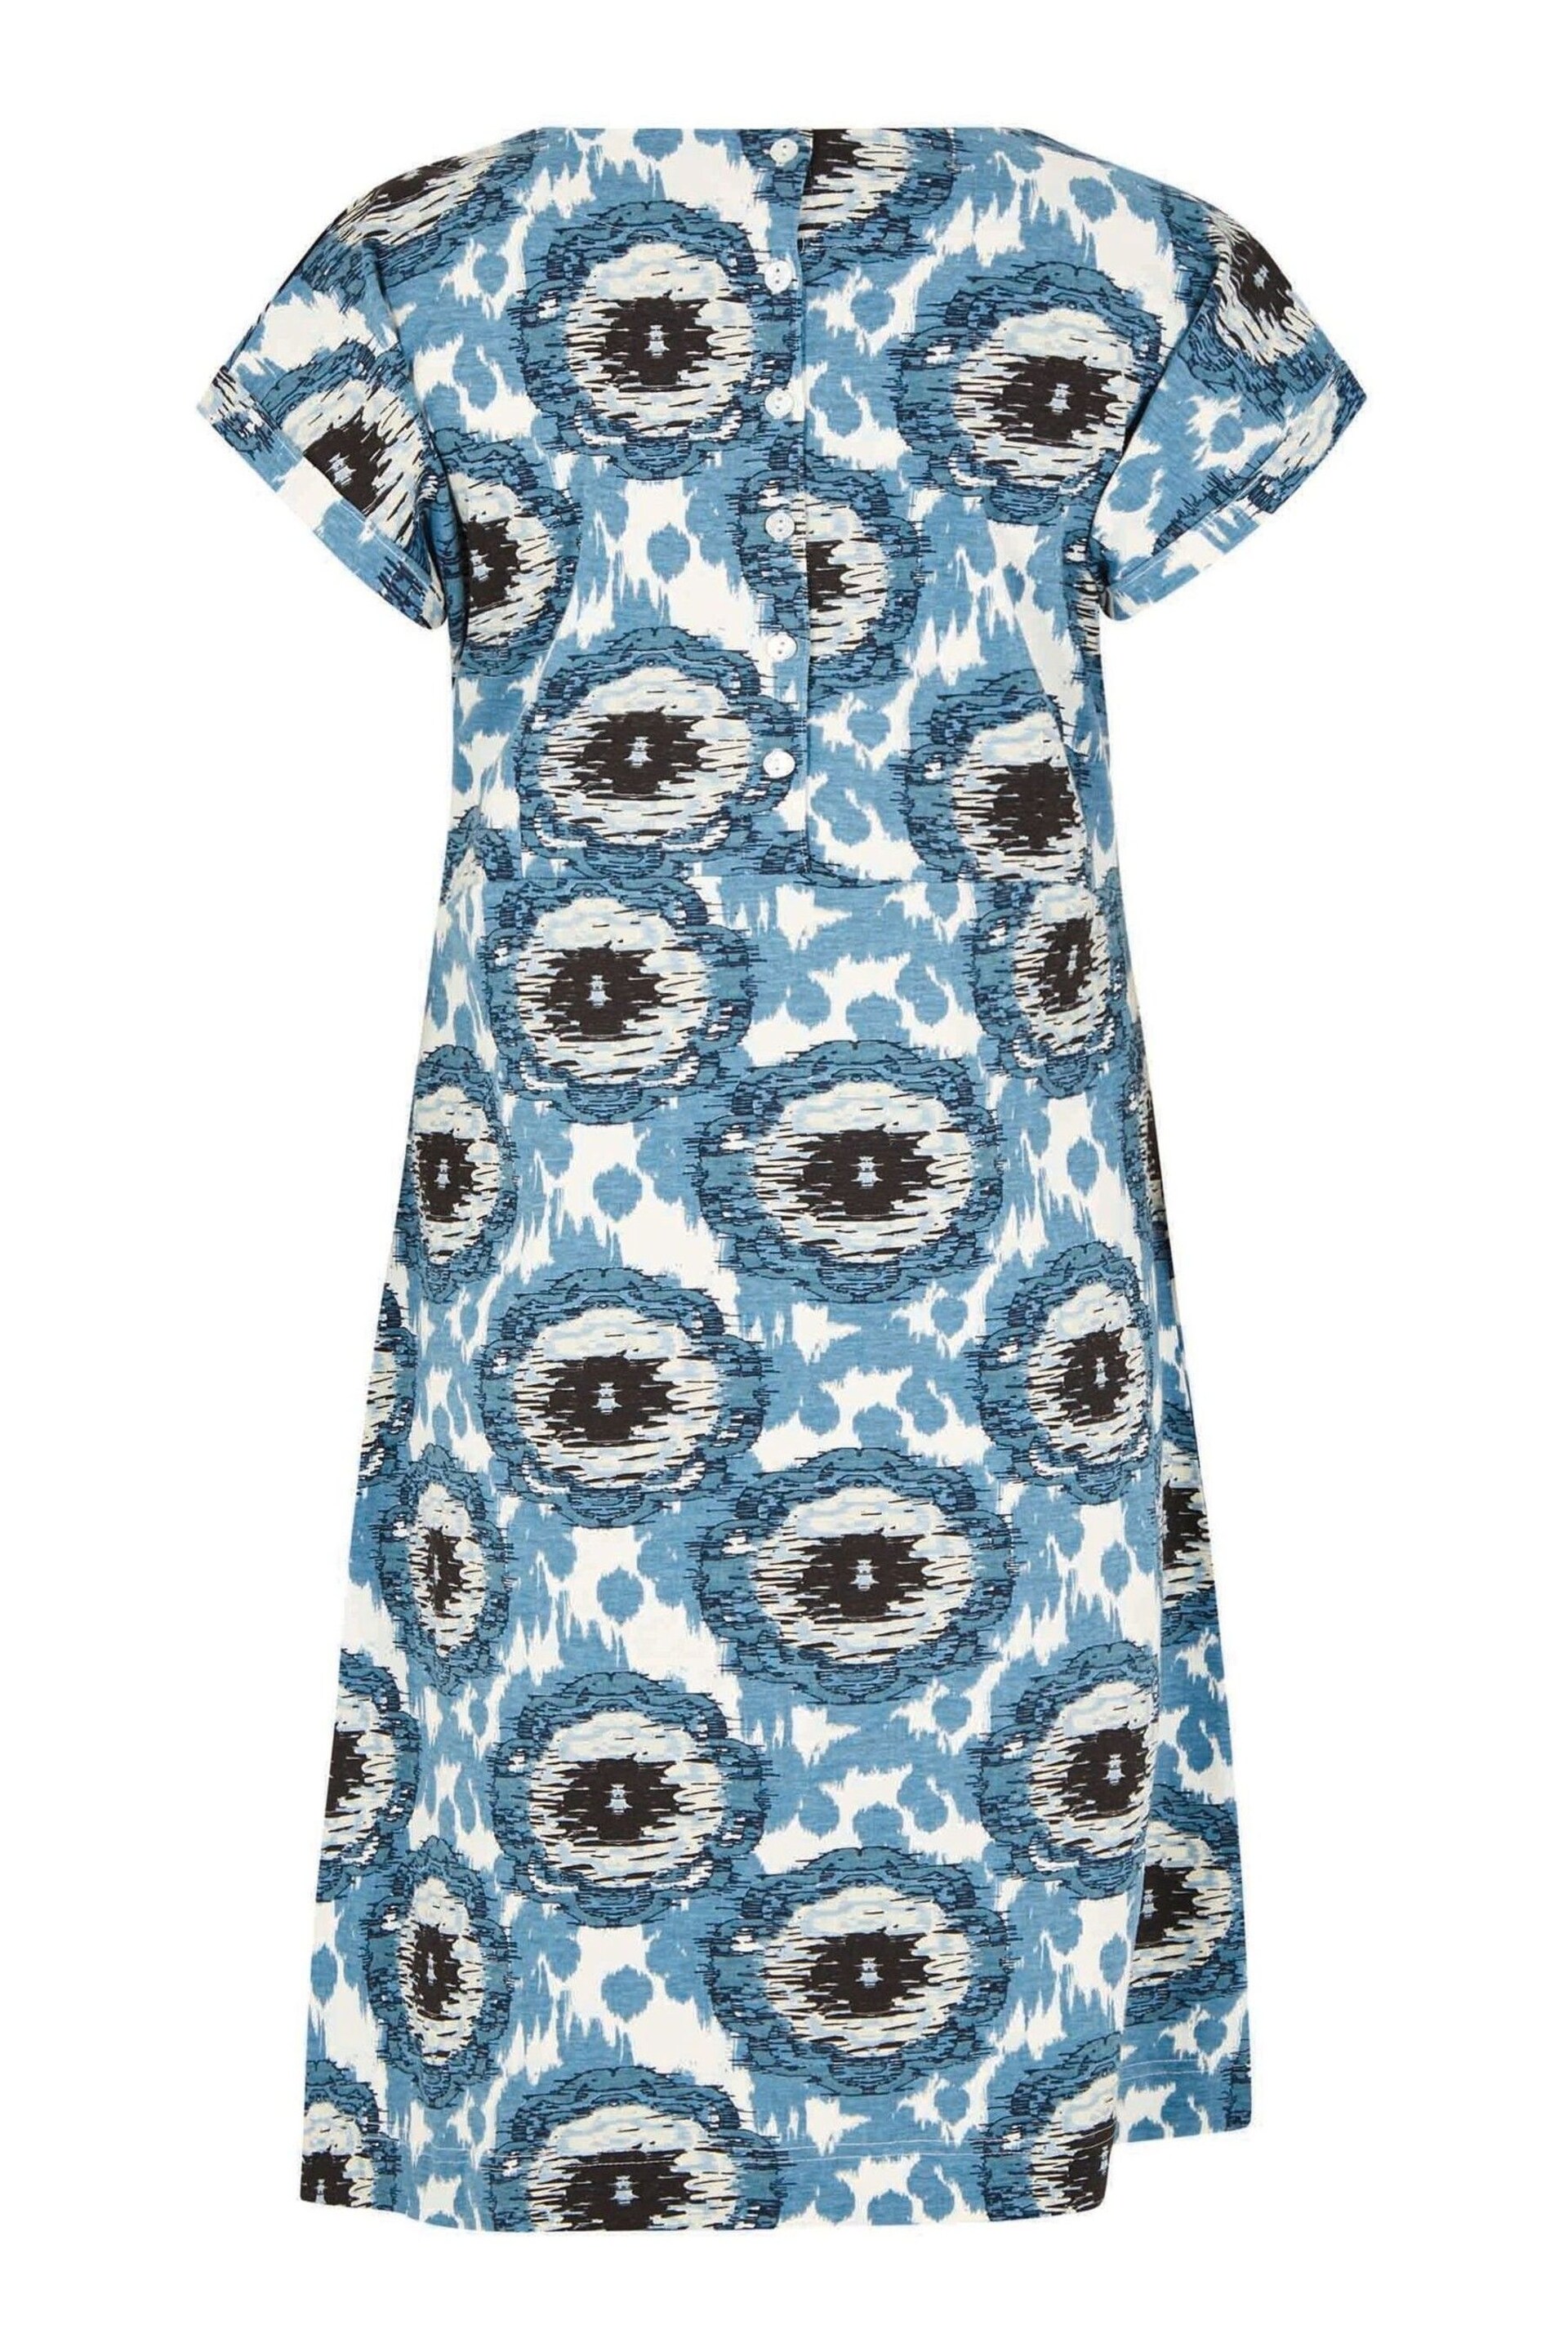 Weird Fish Tallahassee Organic Printed Jersey Dress - Image 7 of 7